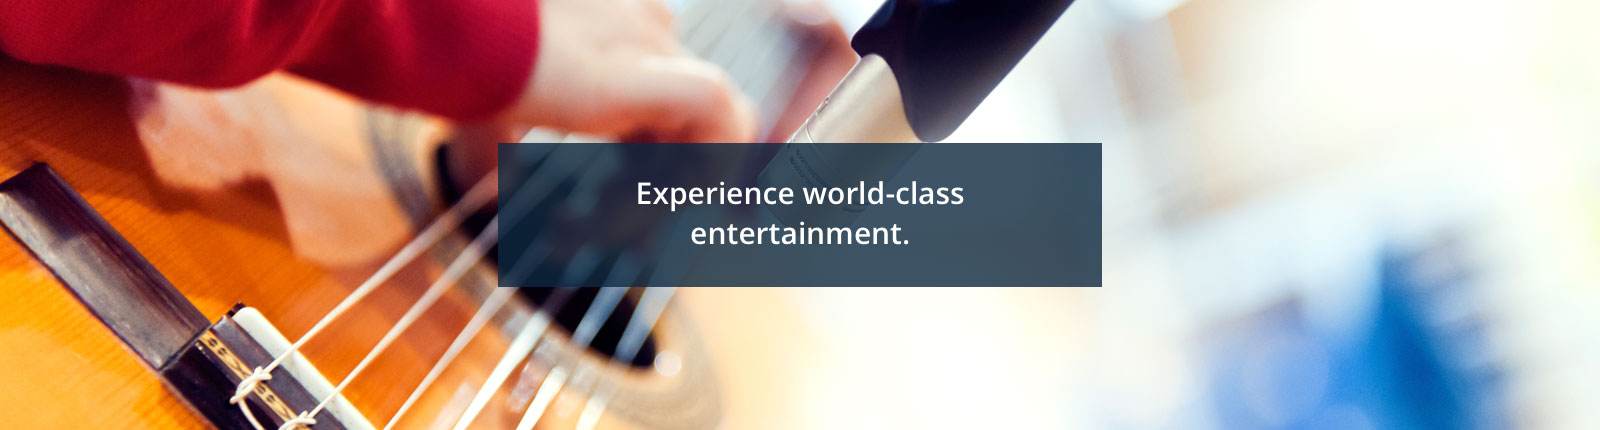 Experience world-class entertainment